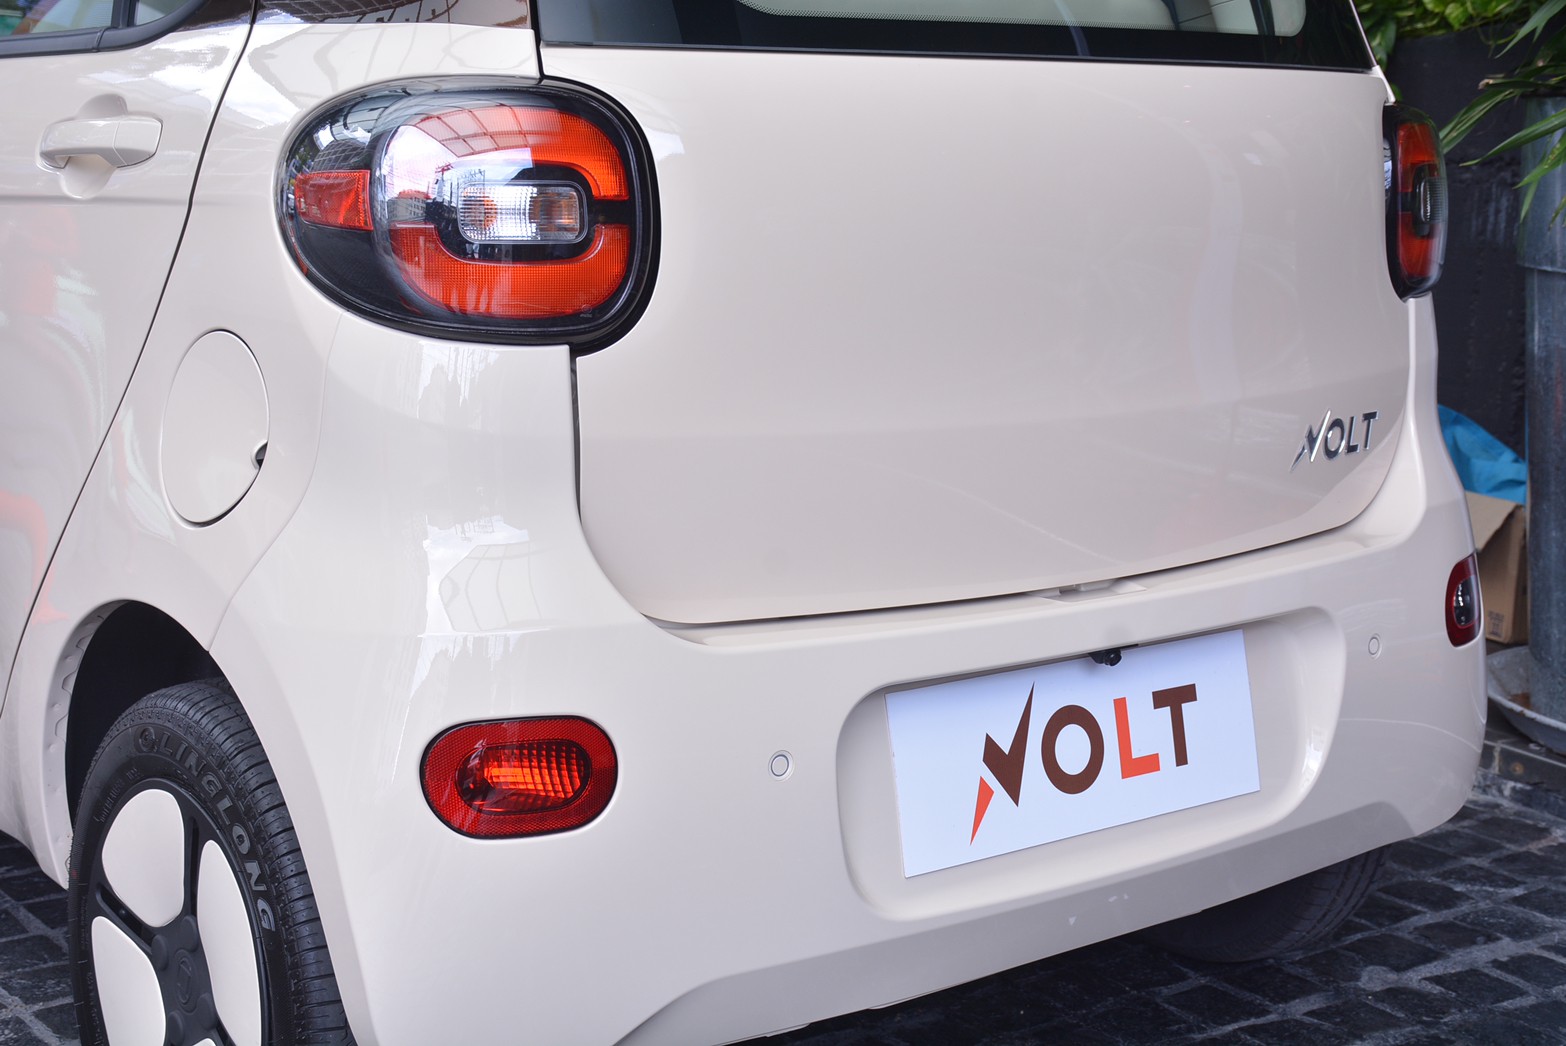 Volt City EV เจาะสเปครถยนต์ไฟฟ้าน่ารัก ราคาน่าคบ ! รุ่น For-Four 385,000-415,000 บาท และรุ่น For-Two 325,000-355,000 บาท โดยเป็นราคาพิเศษของยอดจองลอทแรกๆ